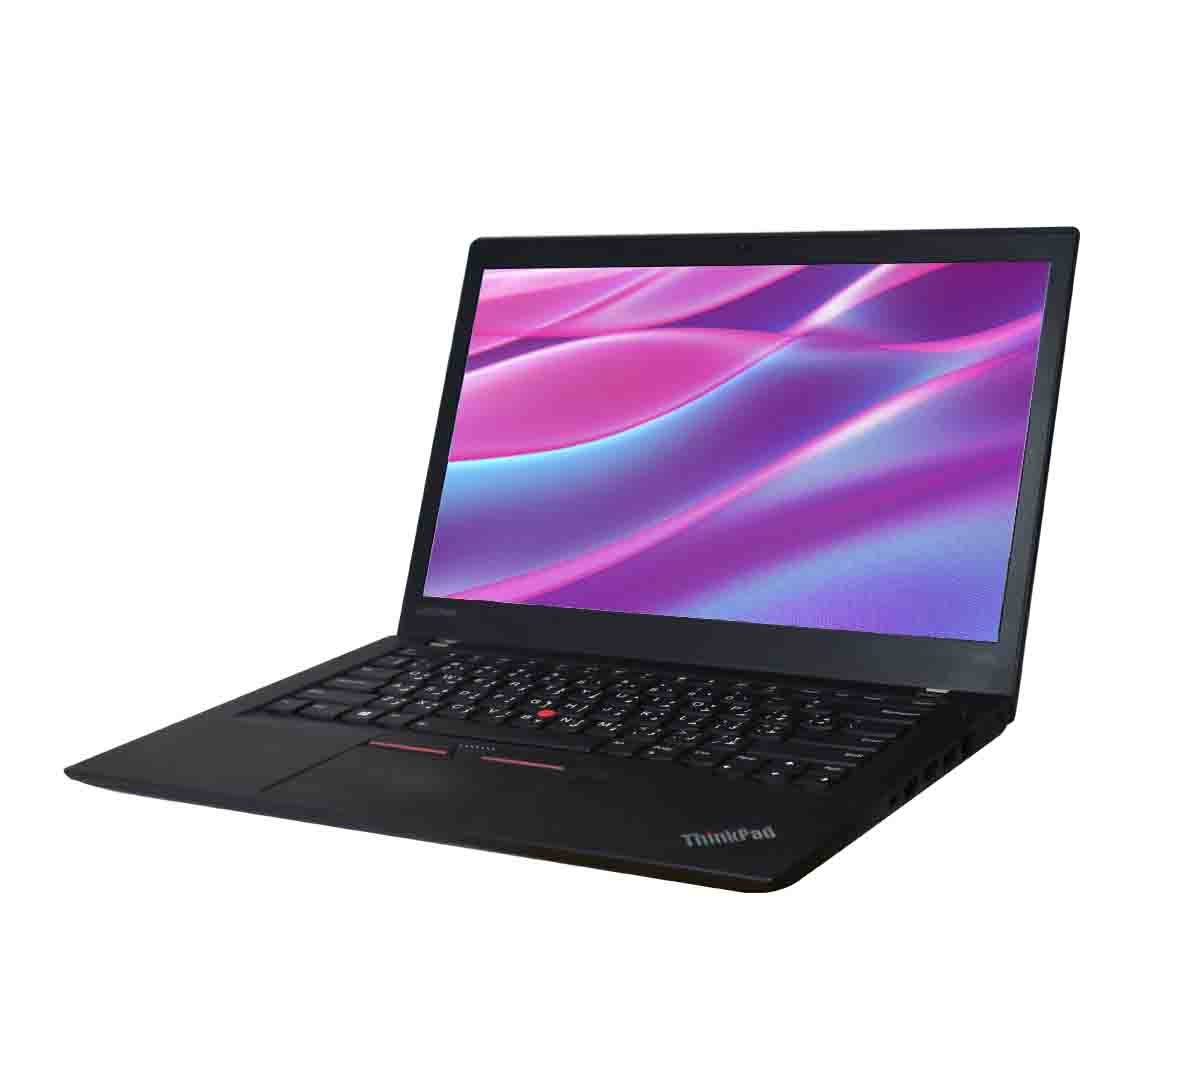 Lenovo ThinkPad T470s Business Laptop, Intel Core i7-7th Generation CPU, 20GB RAM, 256GB SSD, 14 inch Display, Windows 10 Pro, Refurbished Laptop